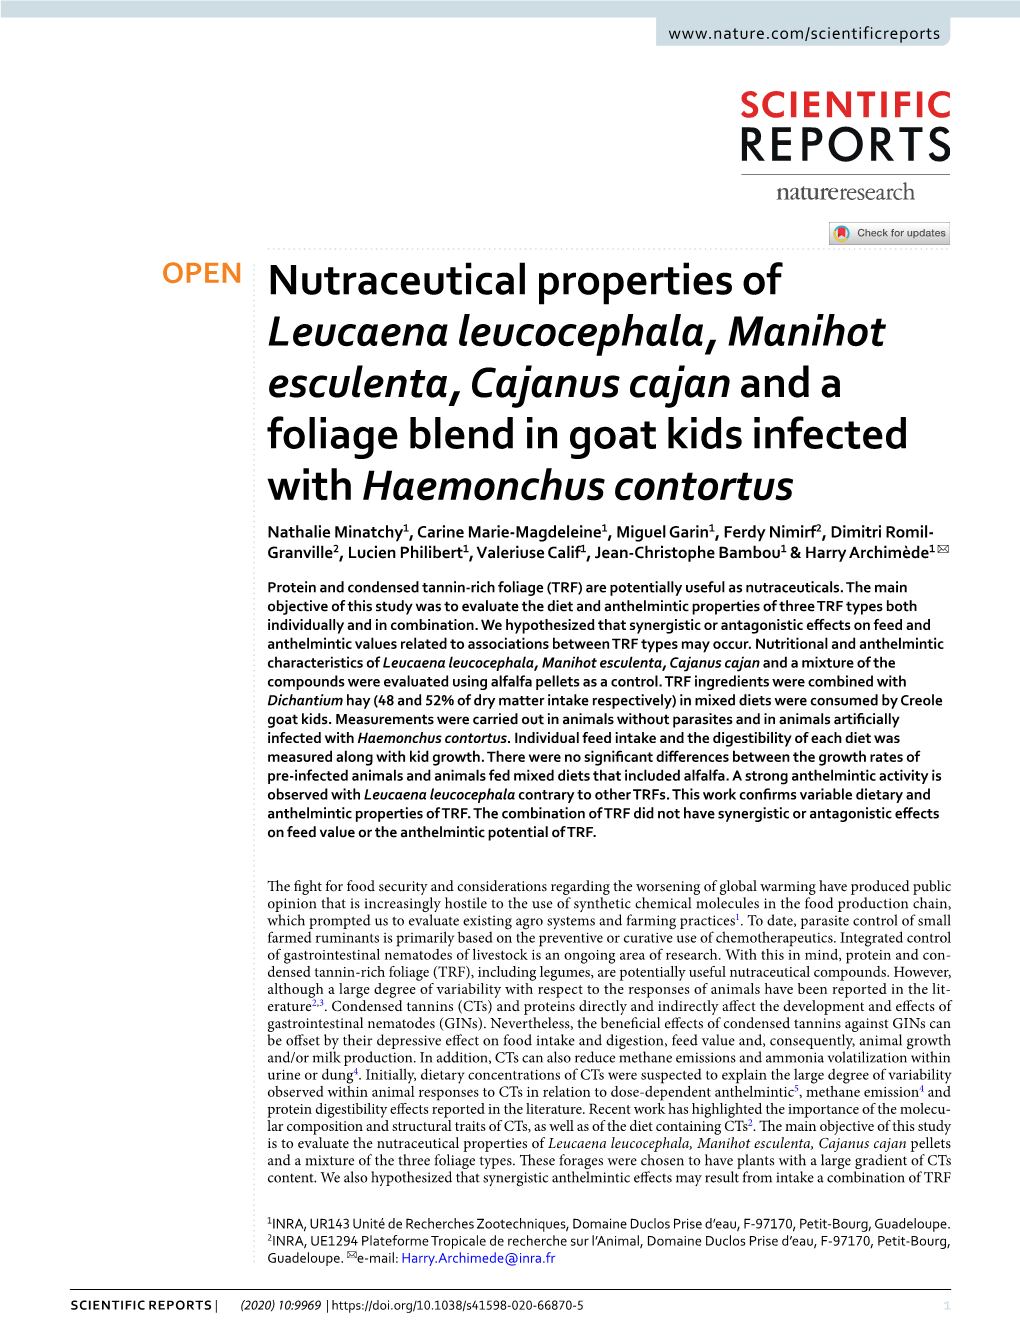 Nutraceutical Properties of Leucaena Leucocephala, Manihot Esculenta